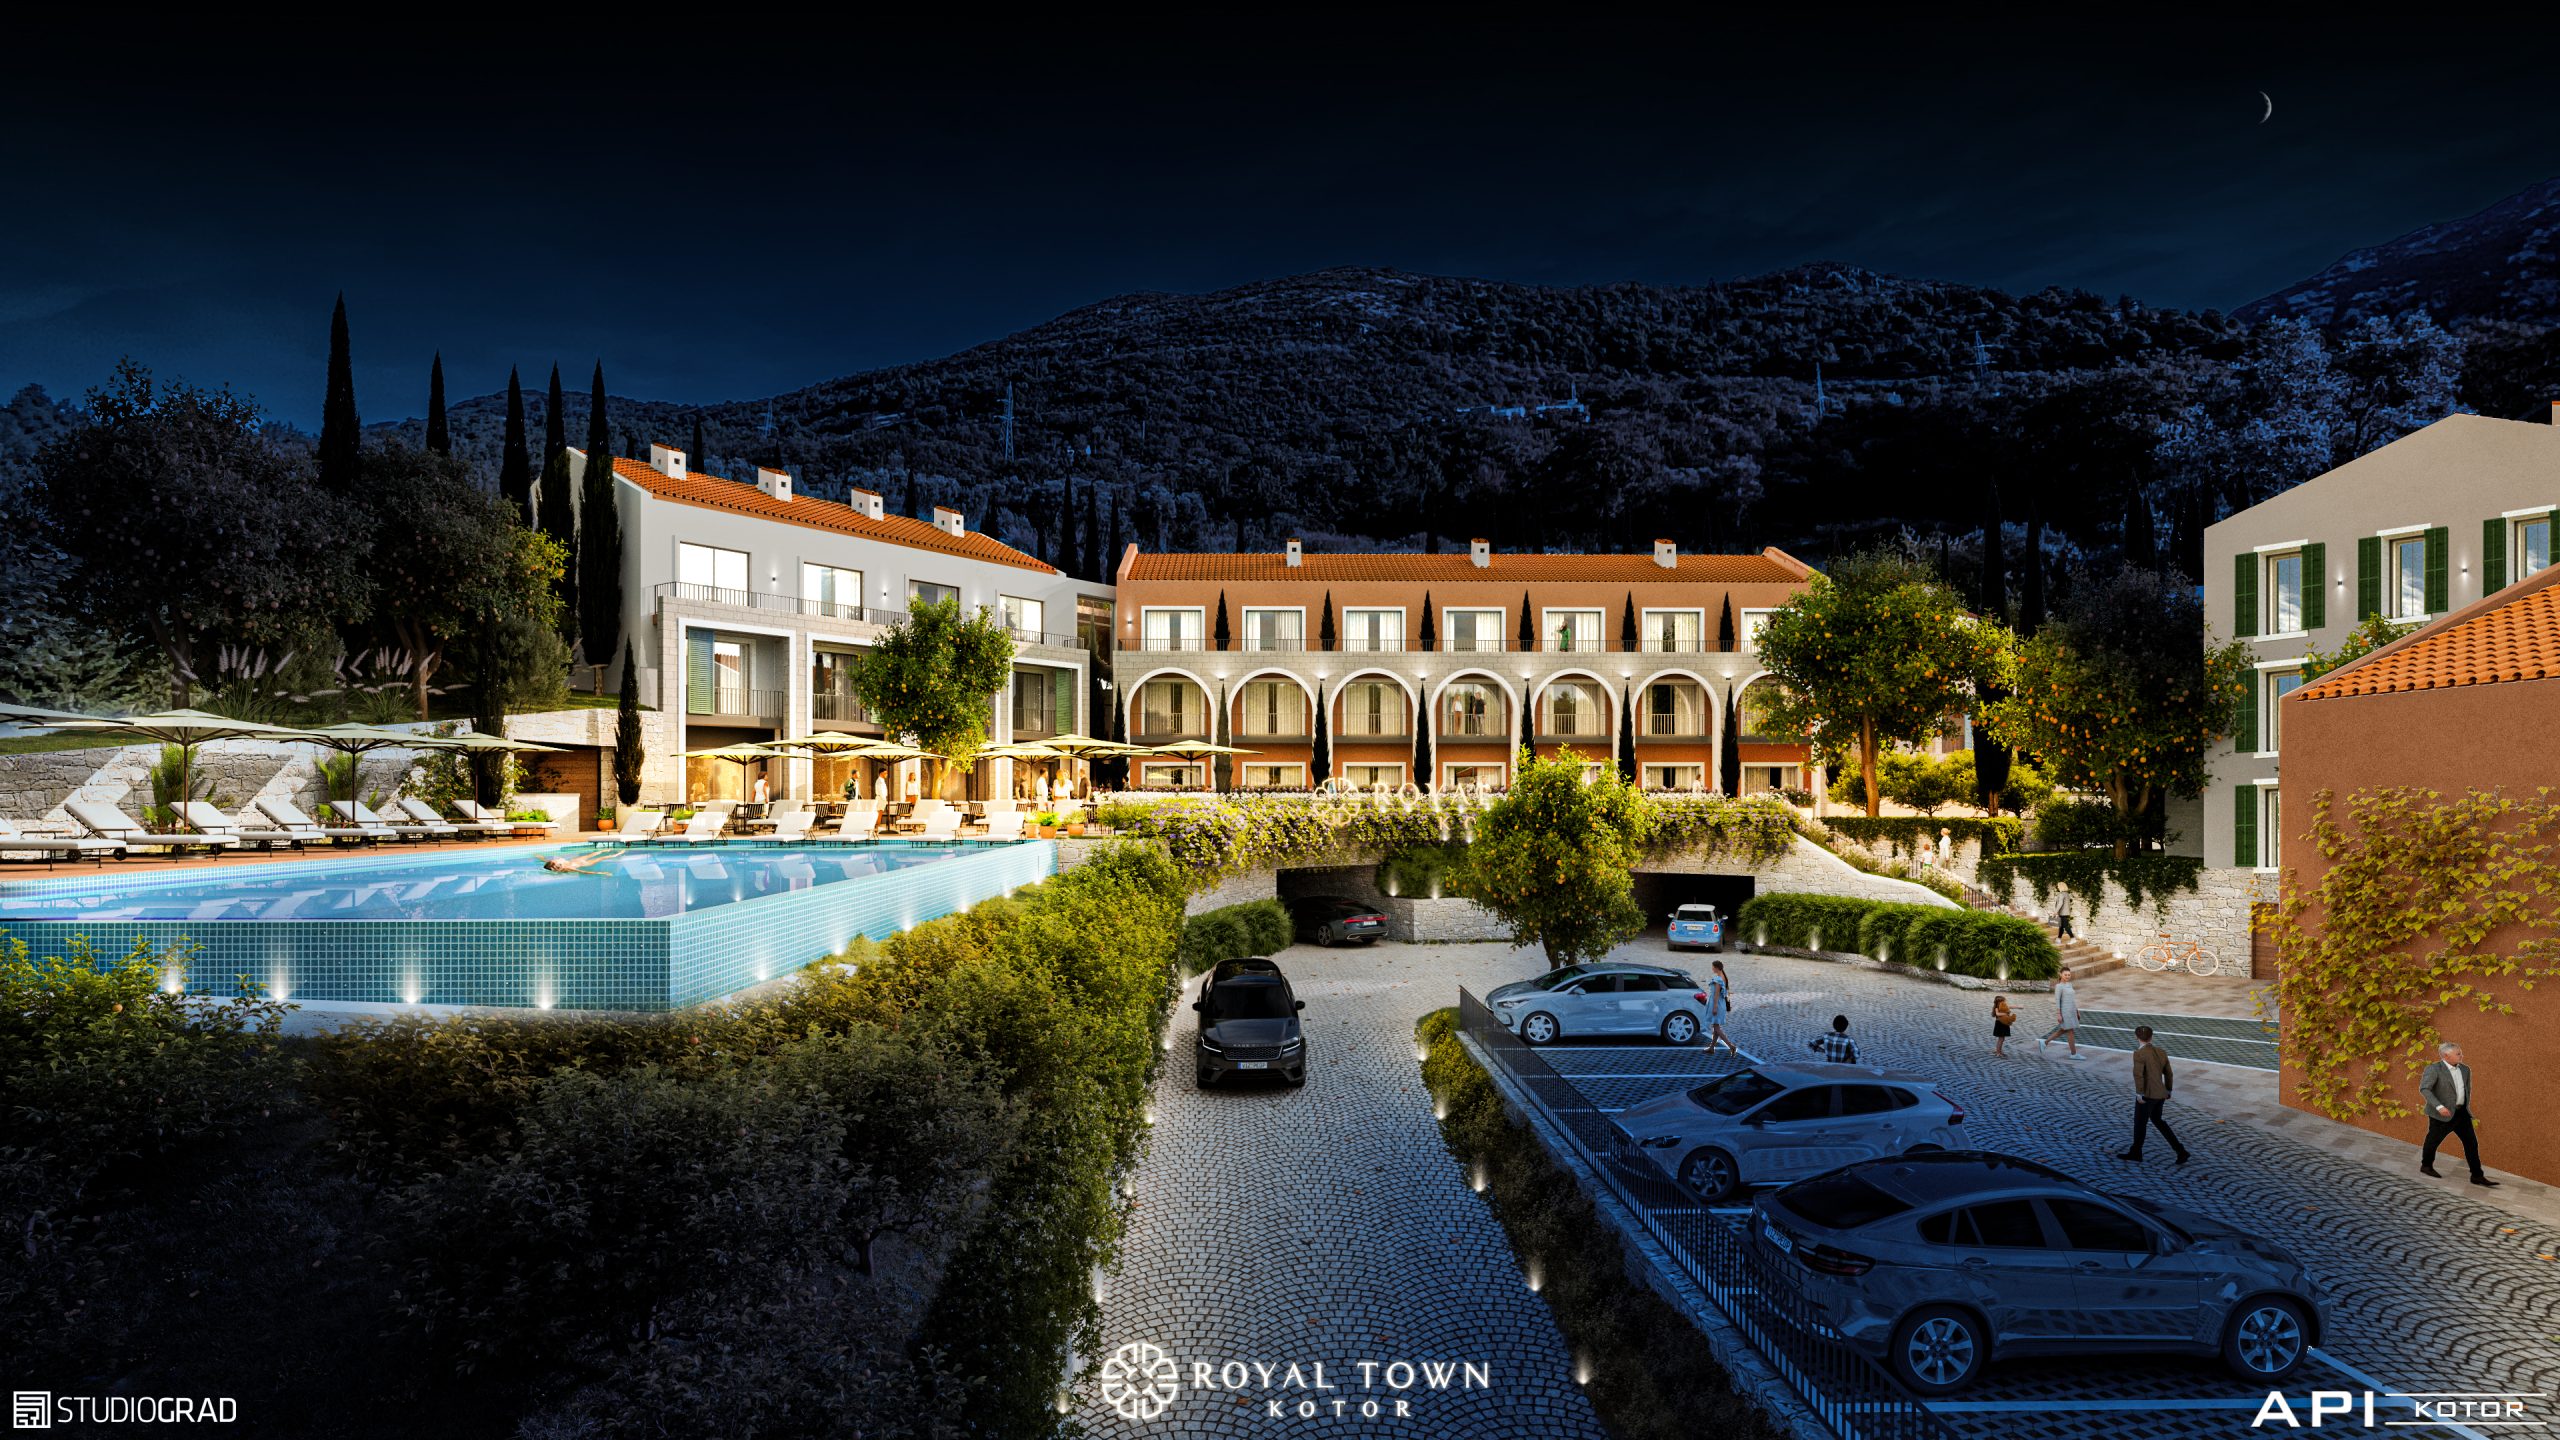 Montenegro Real Estate Investment